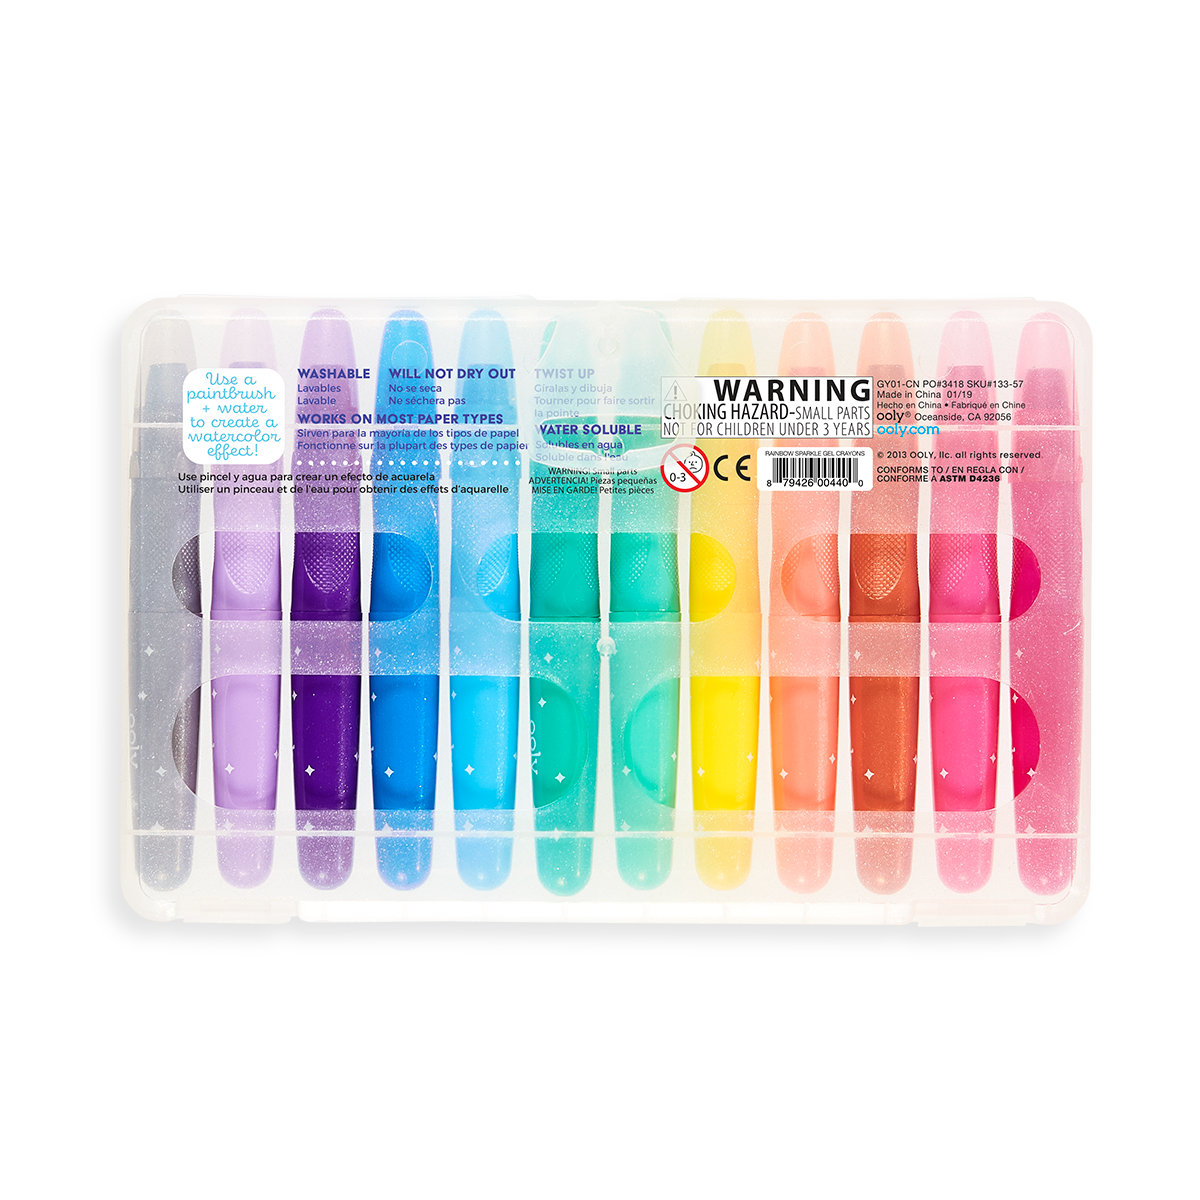 OOLY Rainbow Sparkle Watercolor Gel Crayons Watercolor Sets